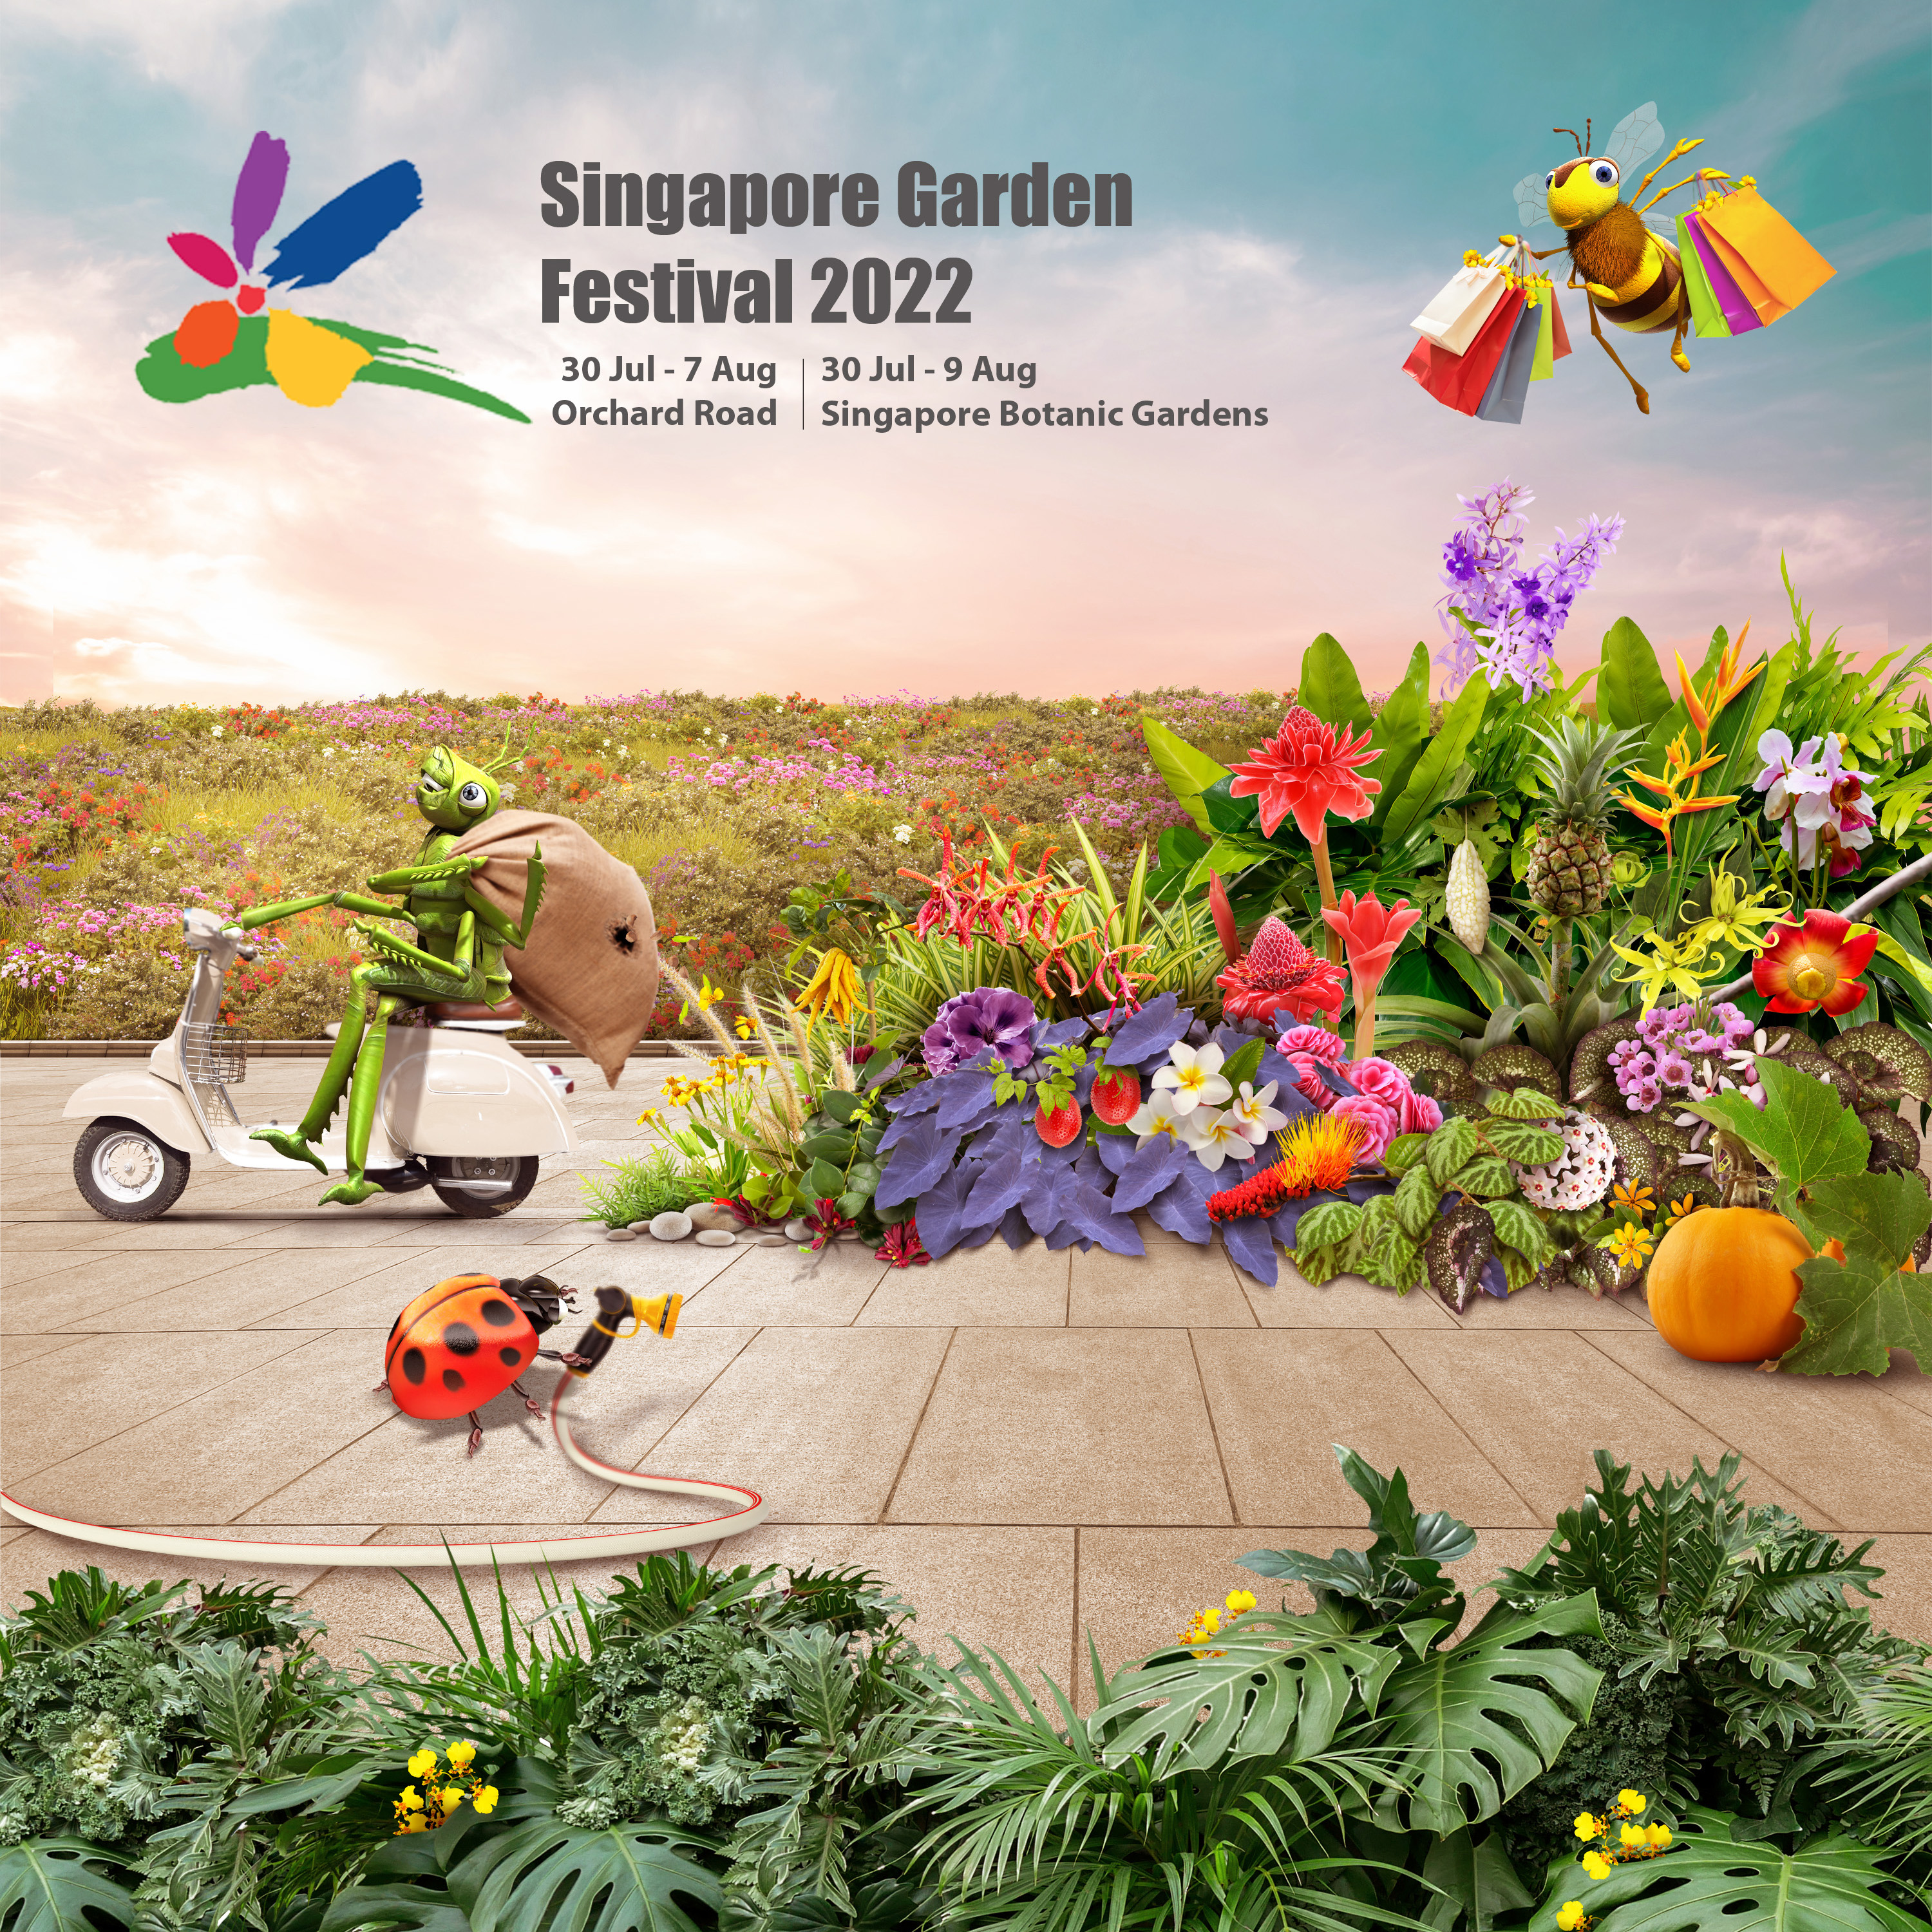 Singapore Garden Festival promotional poster for 30 Jul to 9 Aug